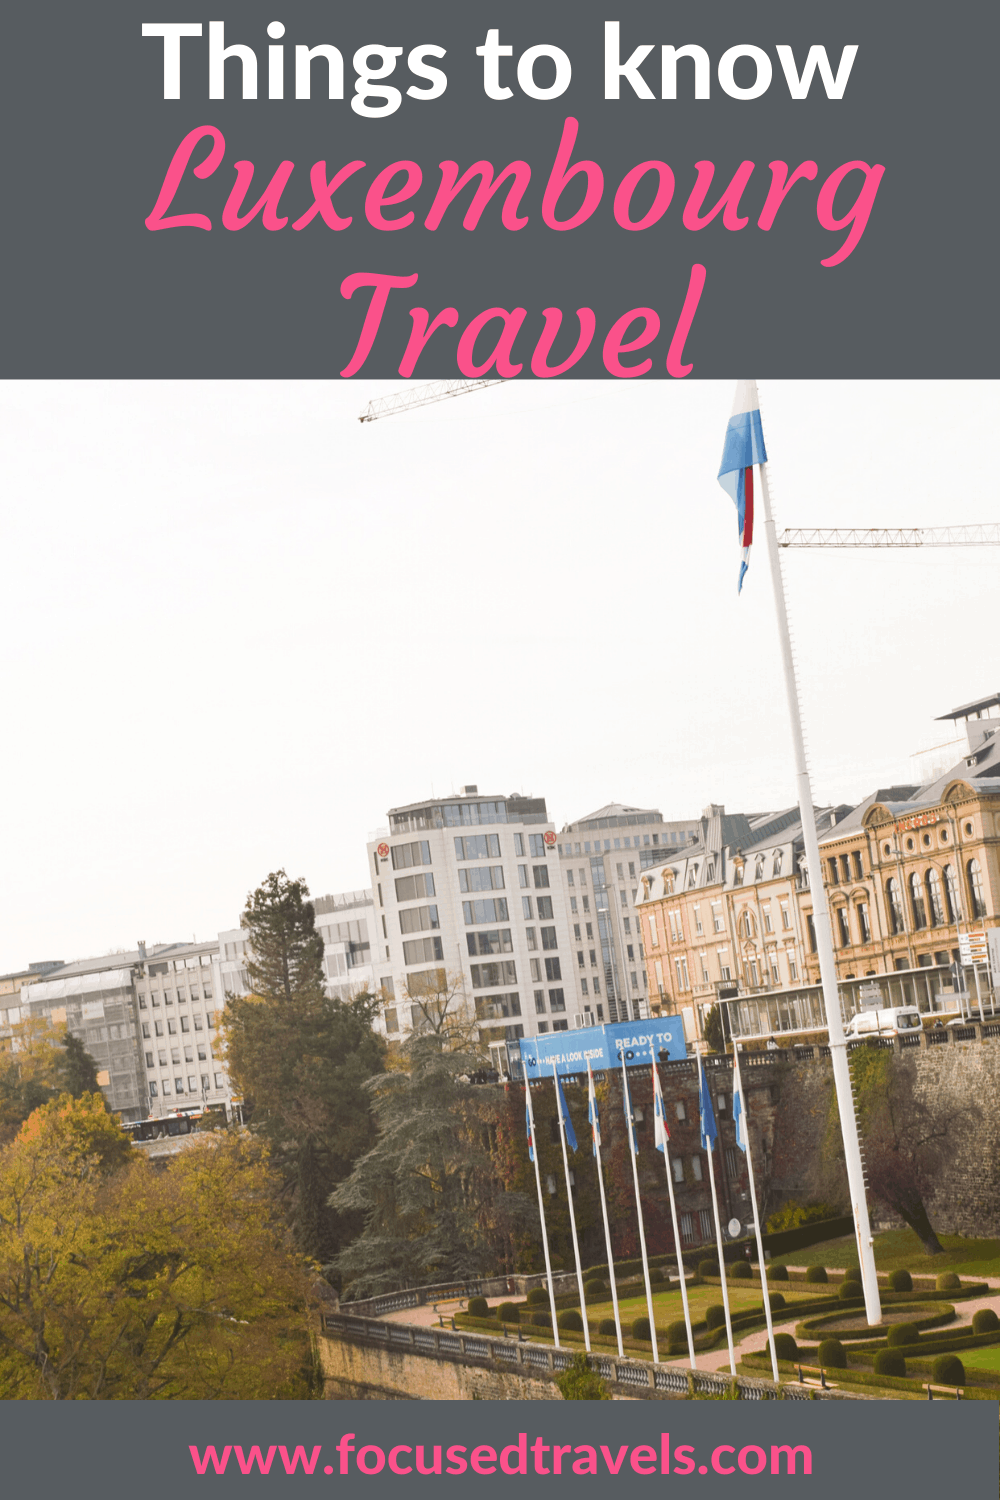 luxembourg travel brochure